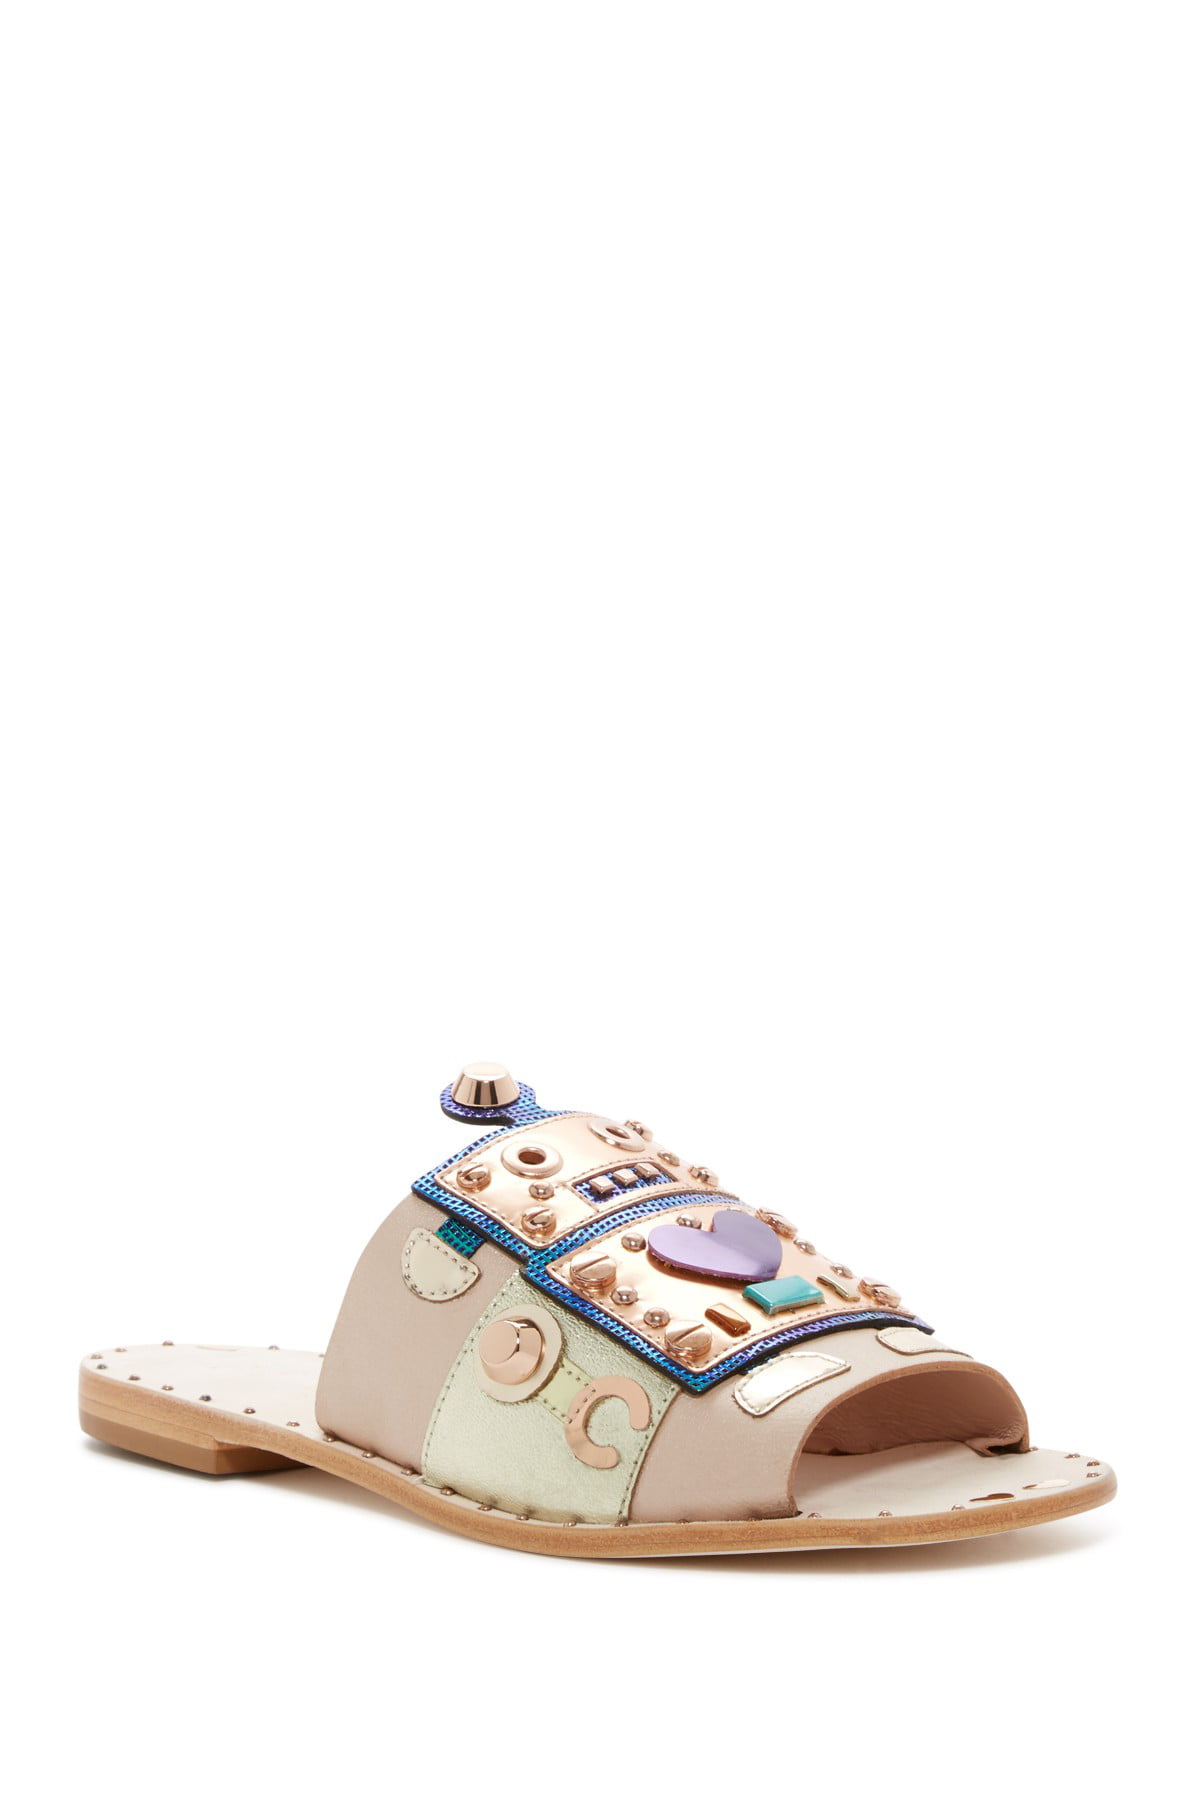 Ivy Kirzhner Bobby Blush Embellished Luxe Kidsuede Slip-On Mule Slide Sandal